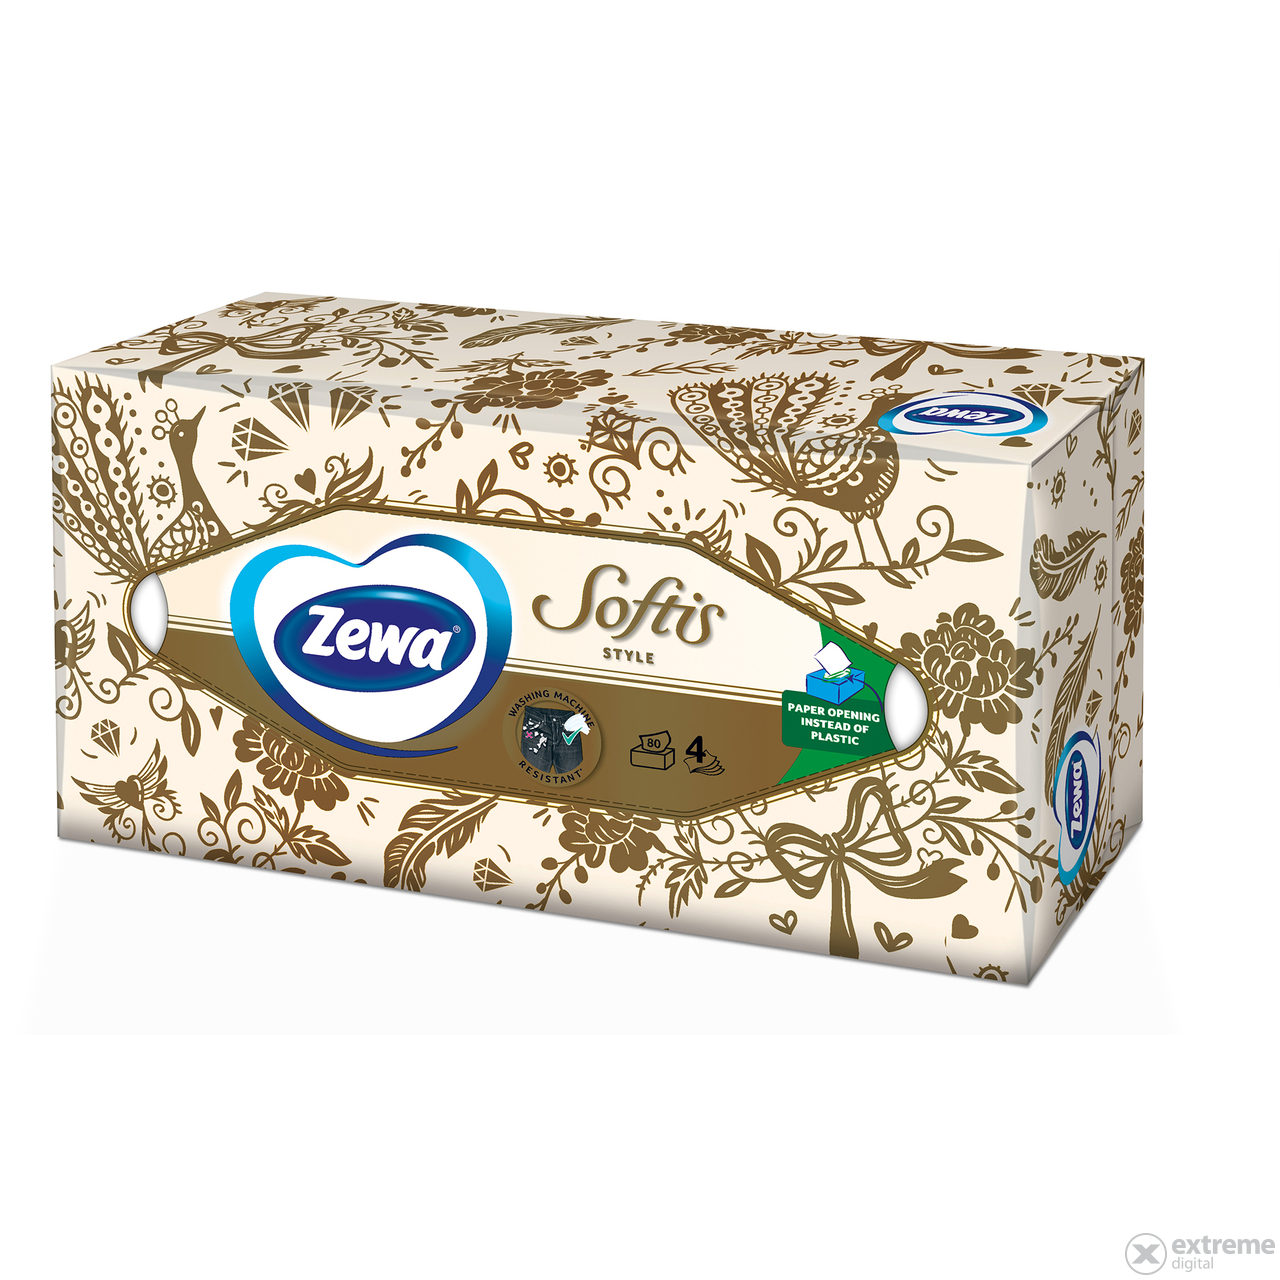 Zewa Softis Style u kutiji papirnati rupčići bez mirisa, 4 sloja, 80 kom